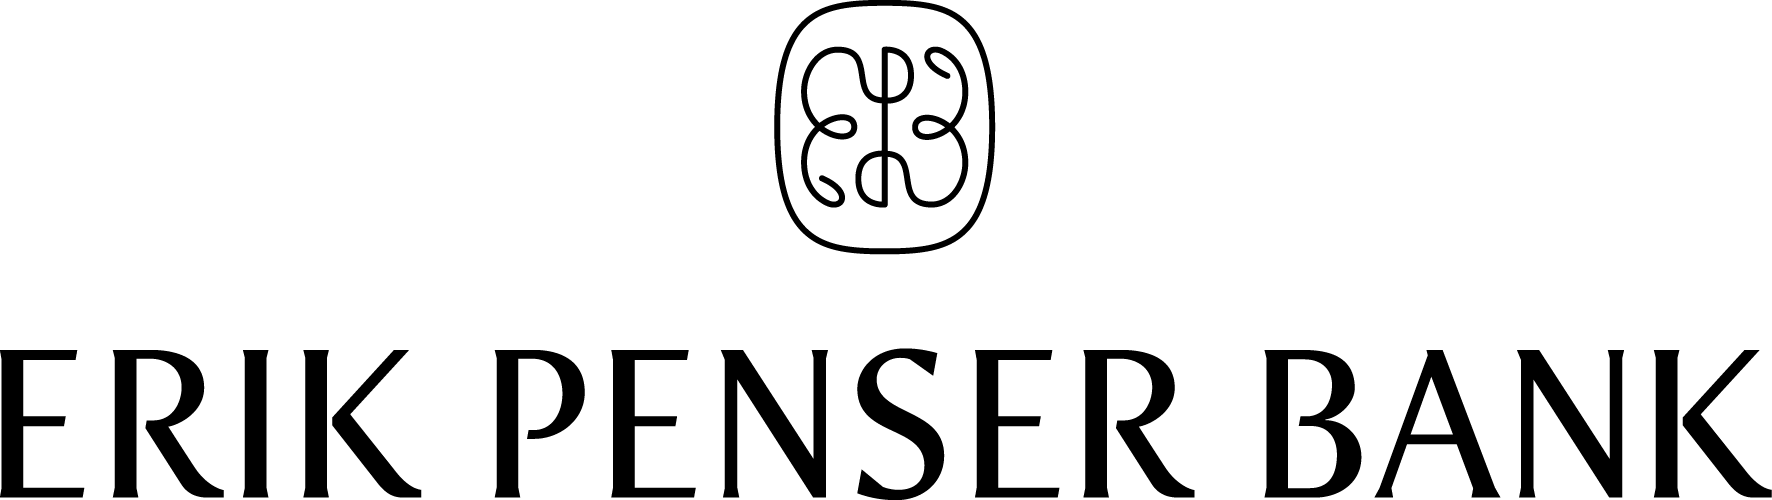 epb-logotyp-svart-cmyk